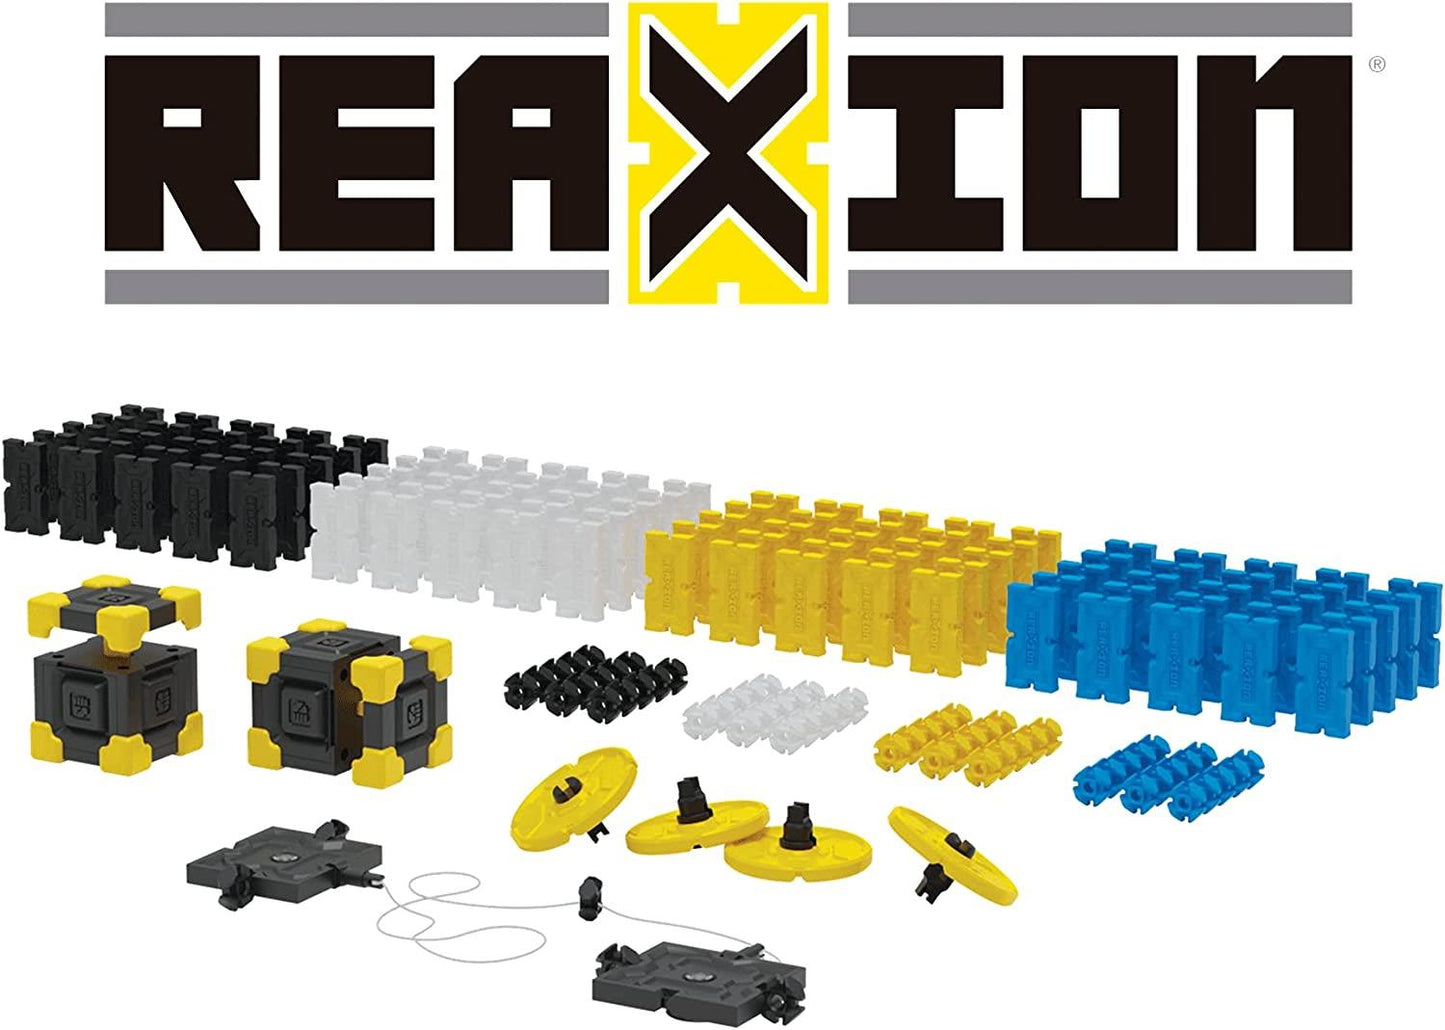 Reaxion Xpand Domino Set 919470 Jeu de construction